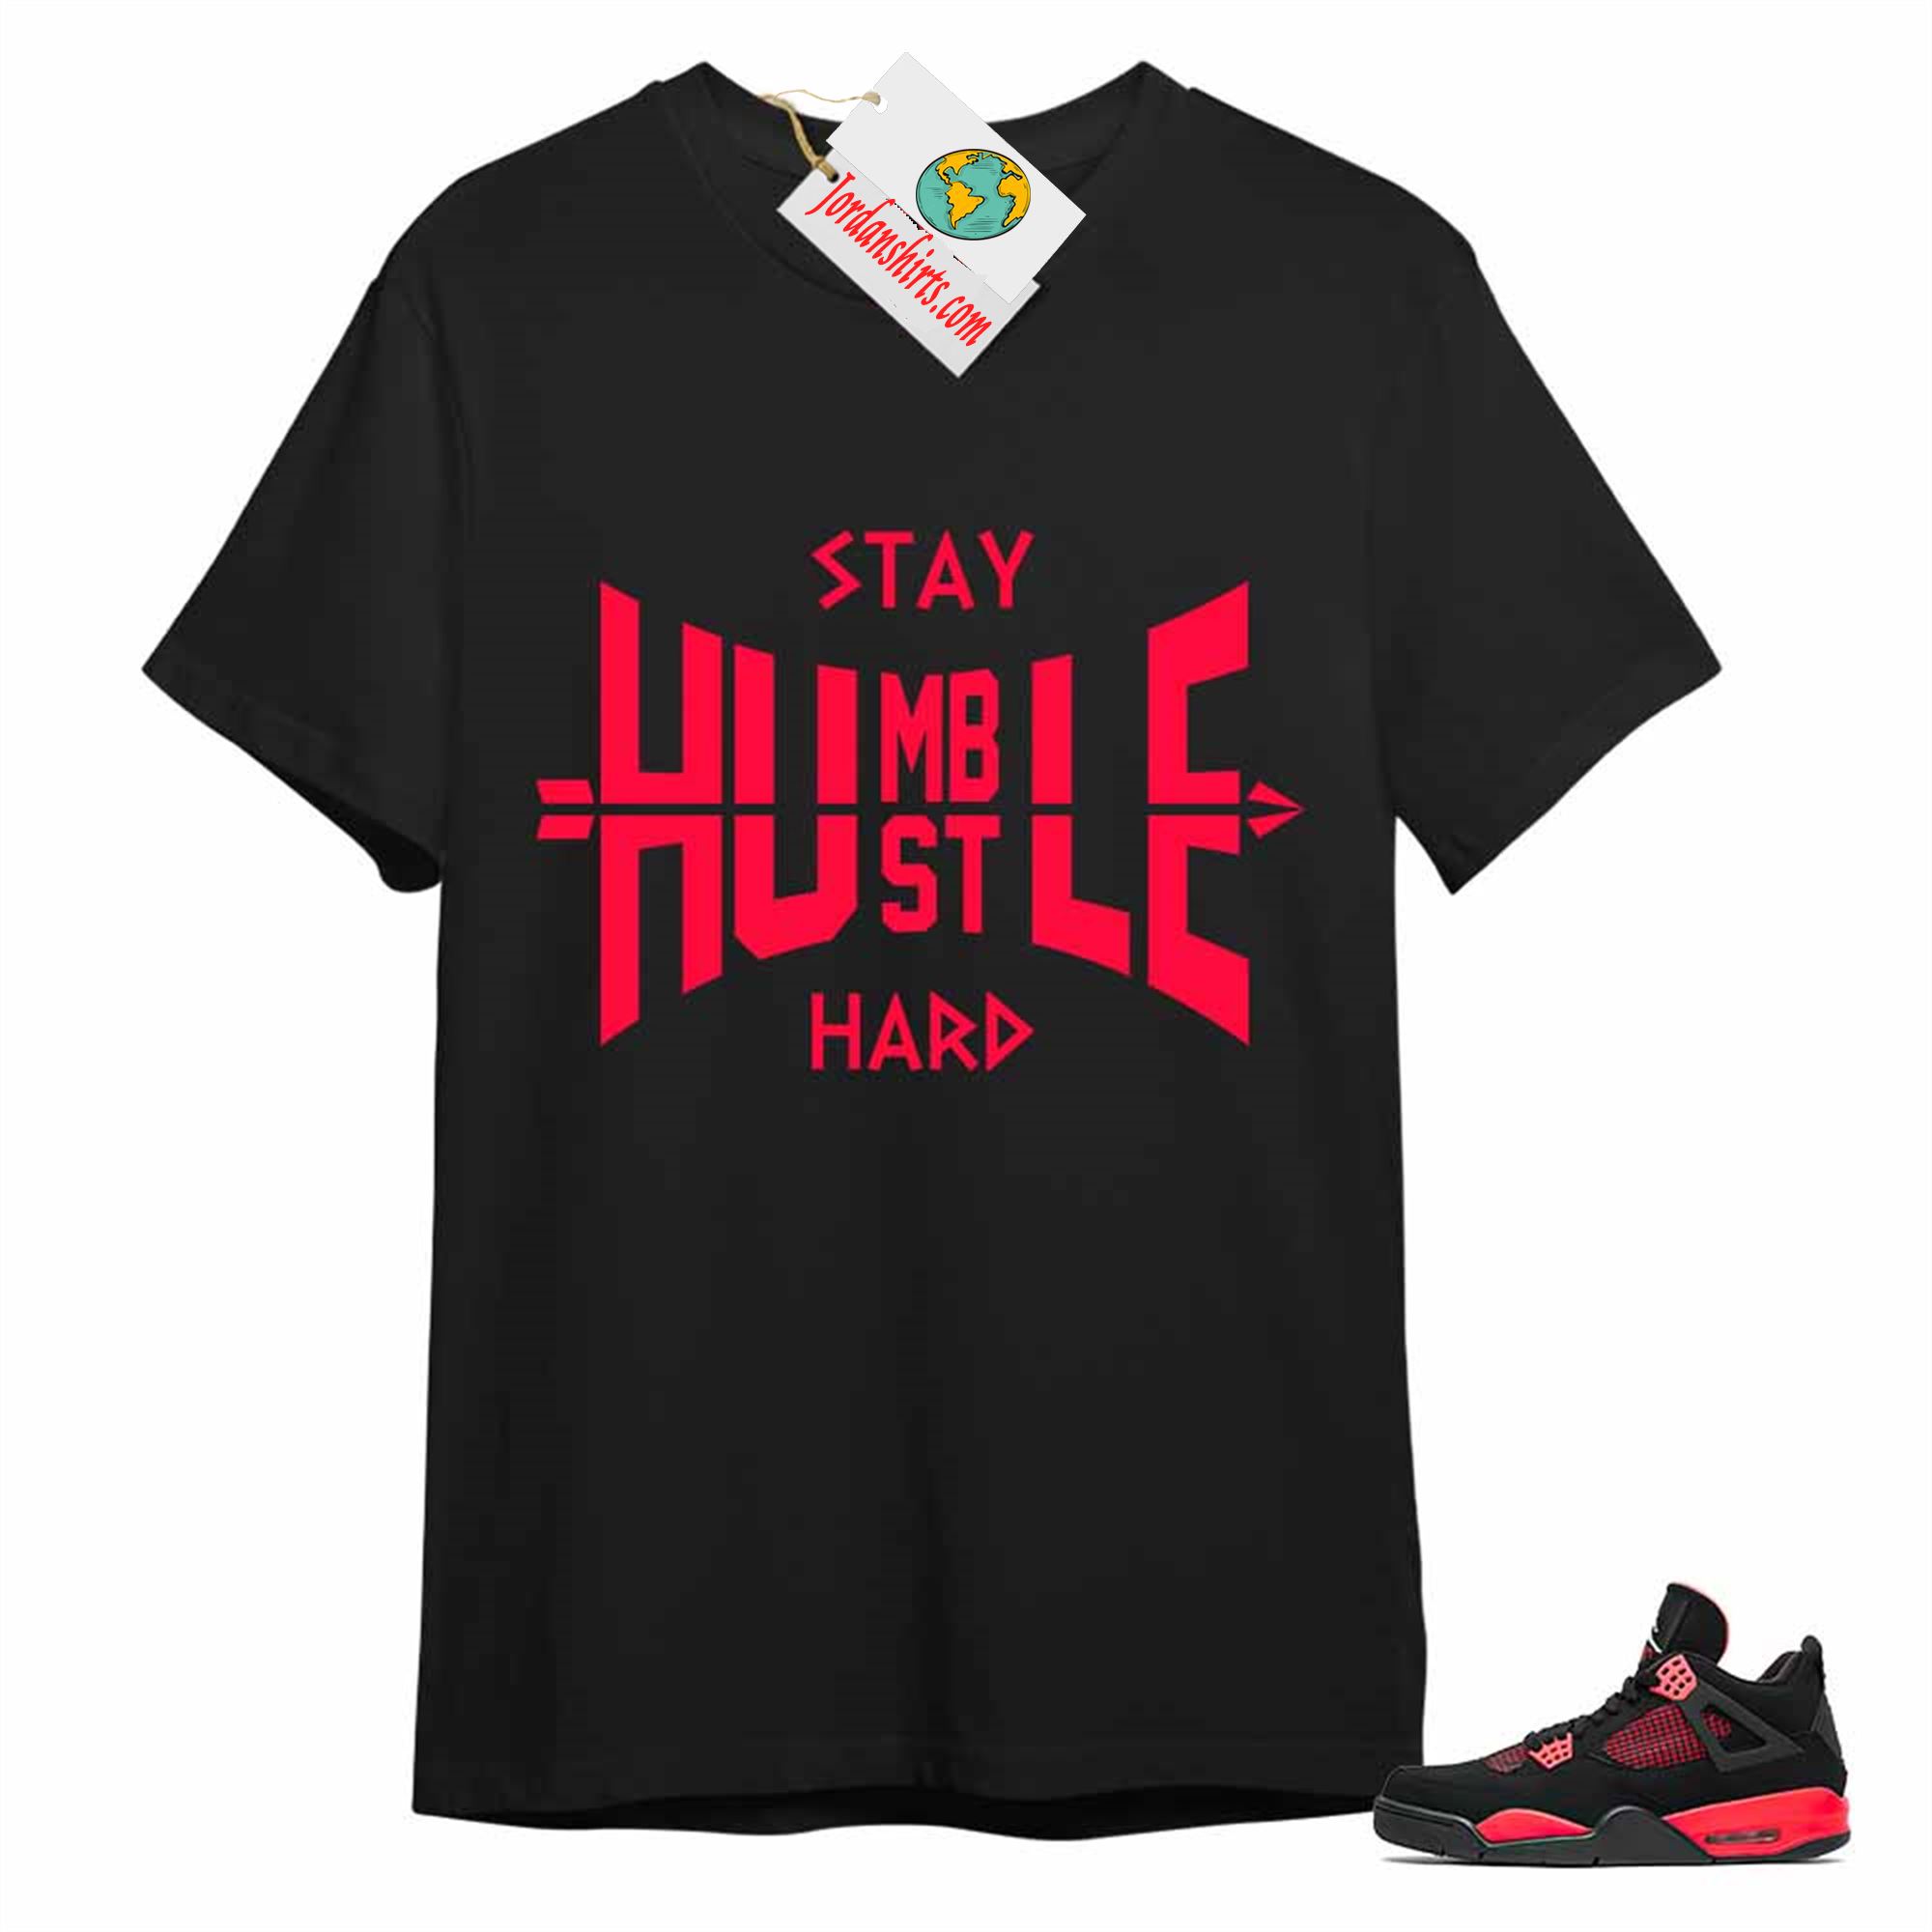 Jordan 4 Shirt, Humble Hustle Hard Black Air Jordan 4 Red Thunder 4s Full Size Up To 5xl